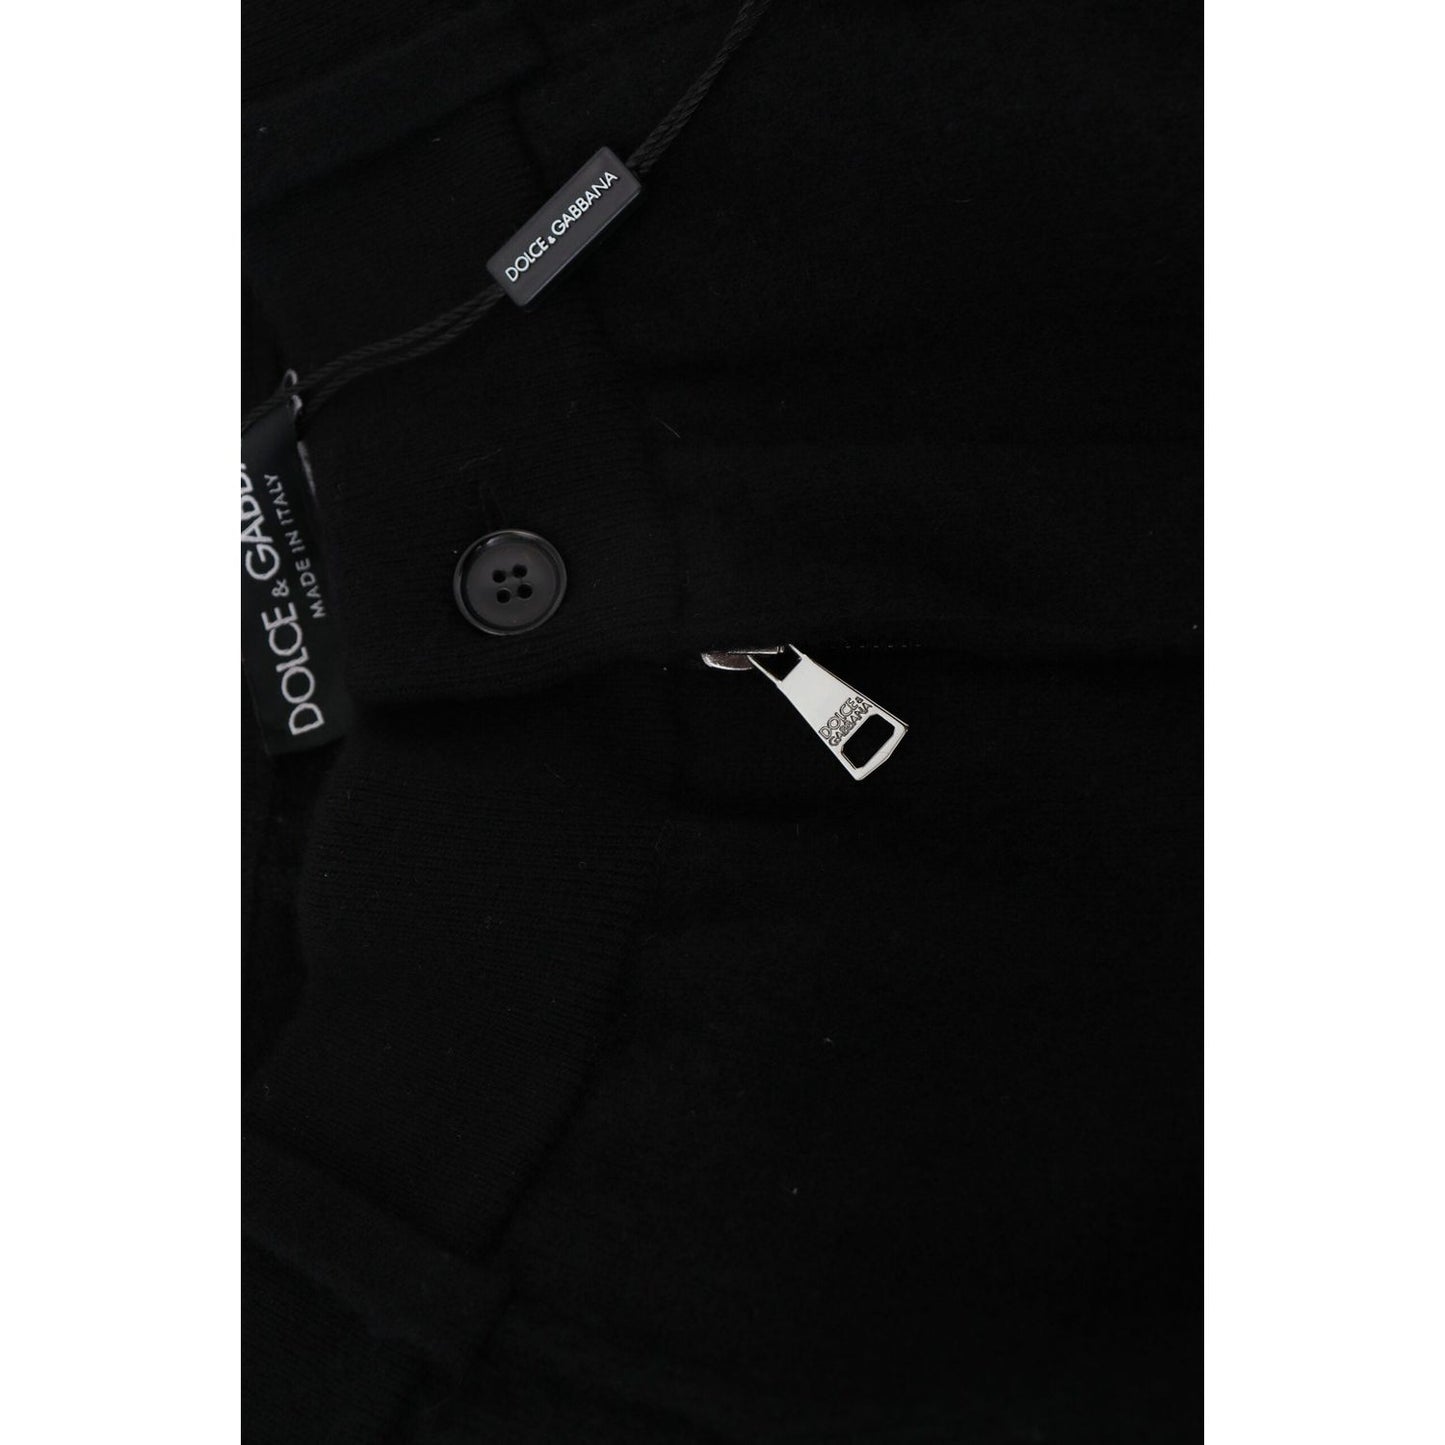 Dolce & Gabbana Elegant Black Tapered Wool Trousers black-solid-men-tapered-pants